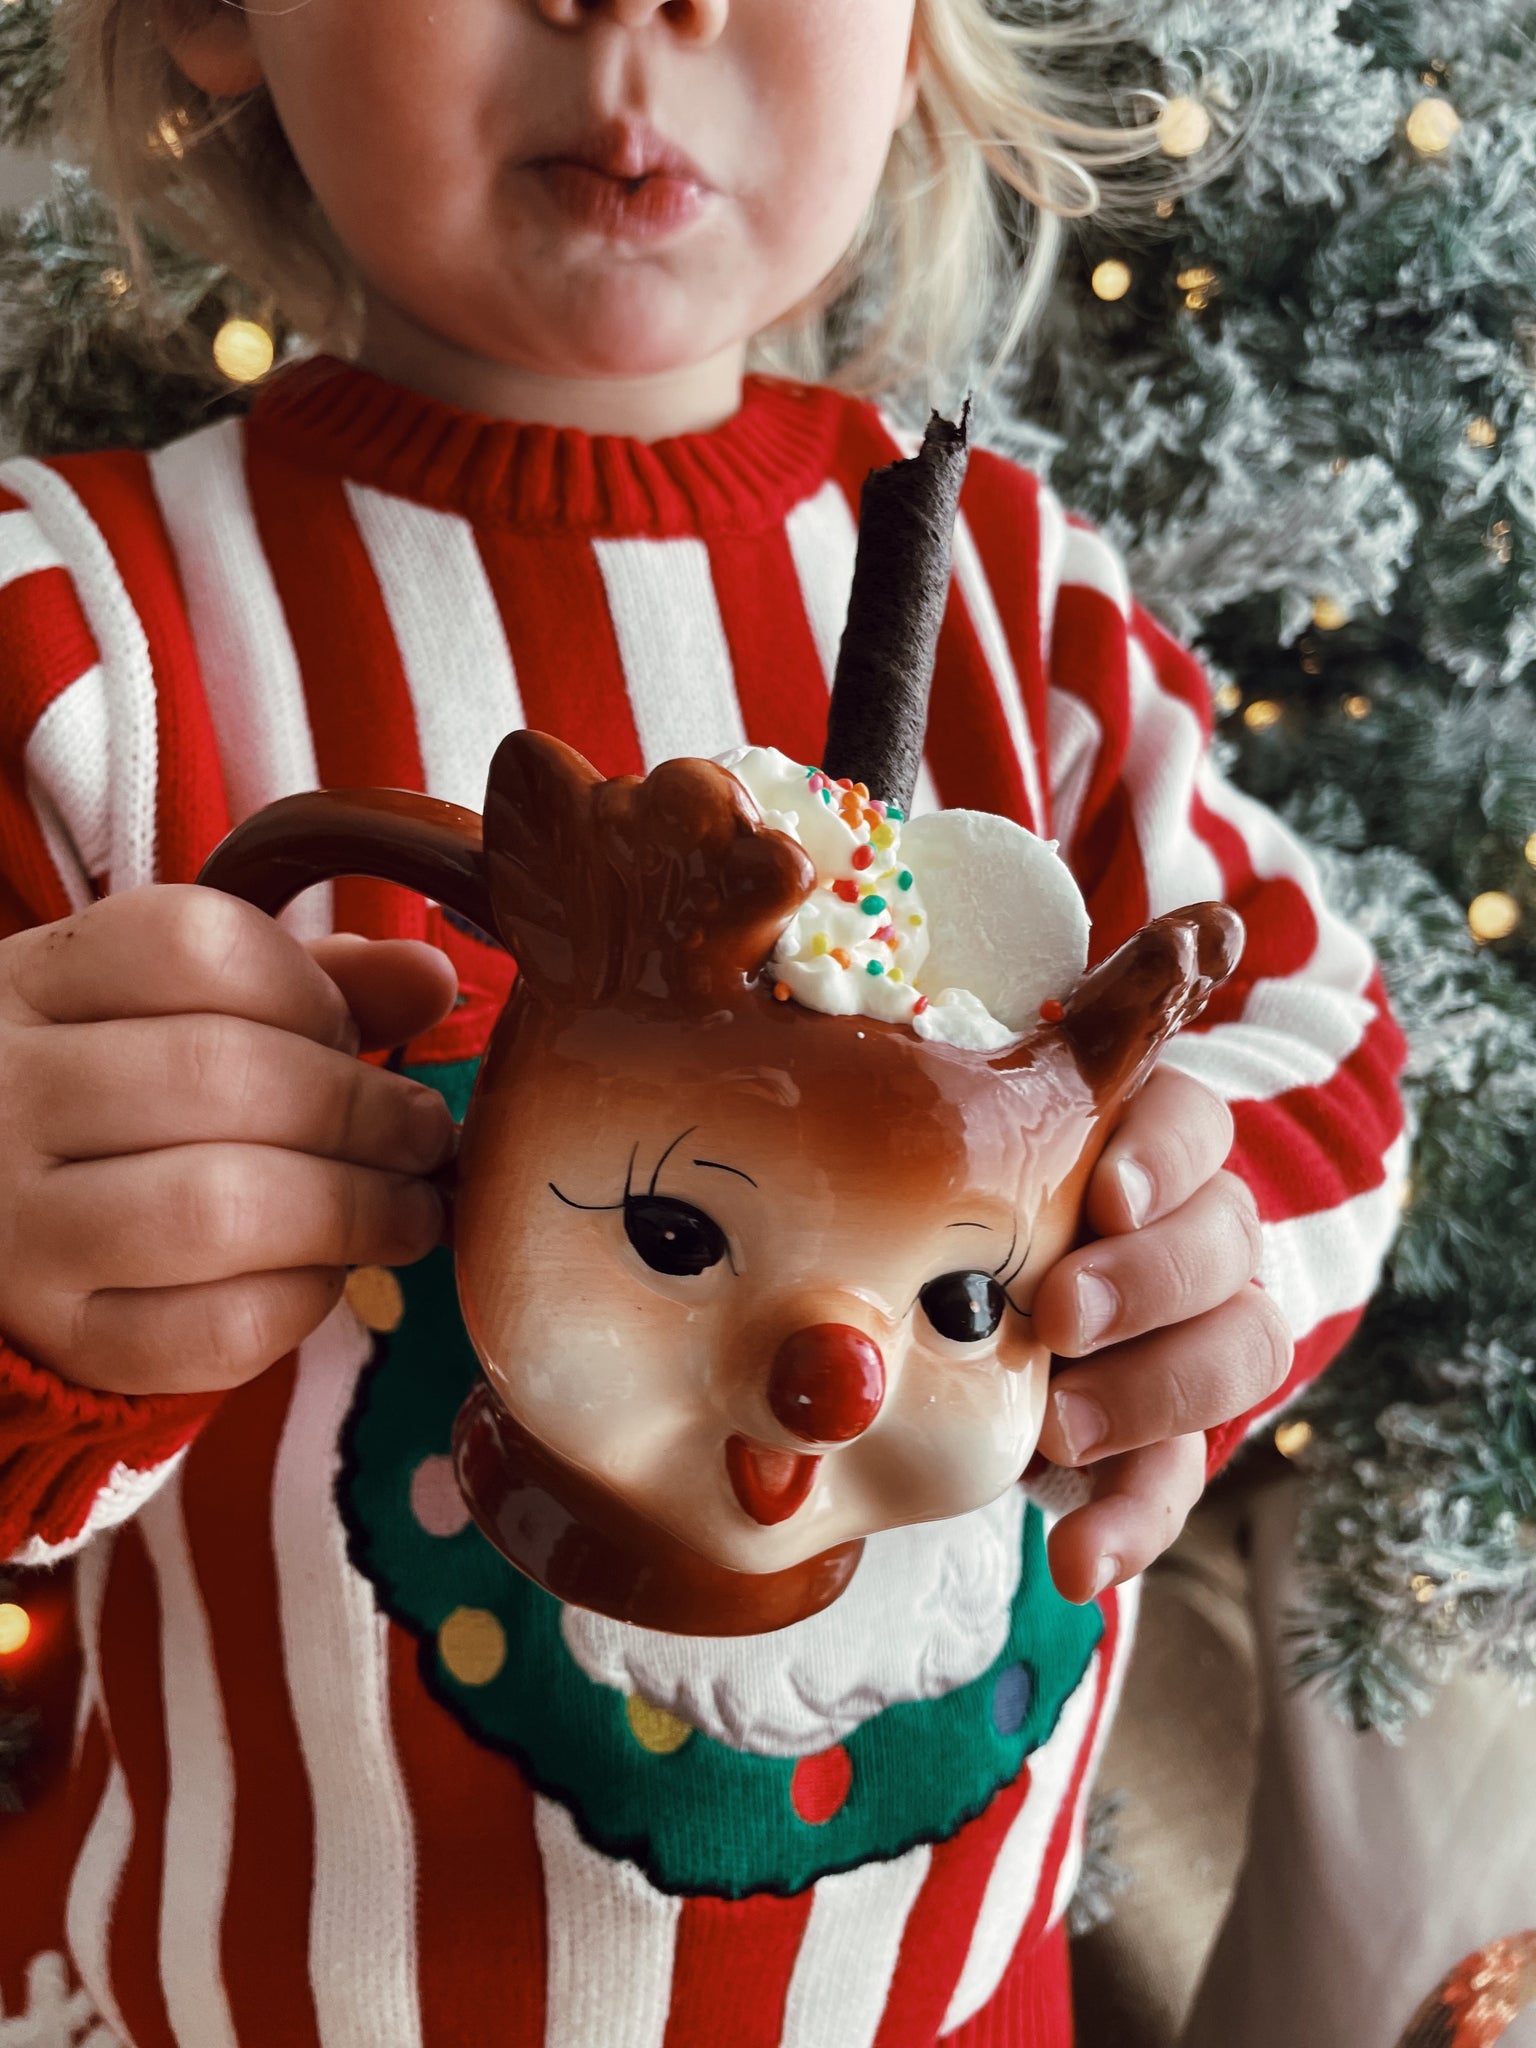 Rudolph®-Shaped Kids Mugs, Set of 4